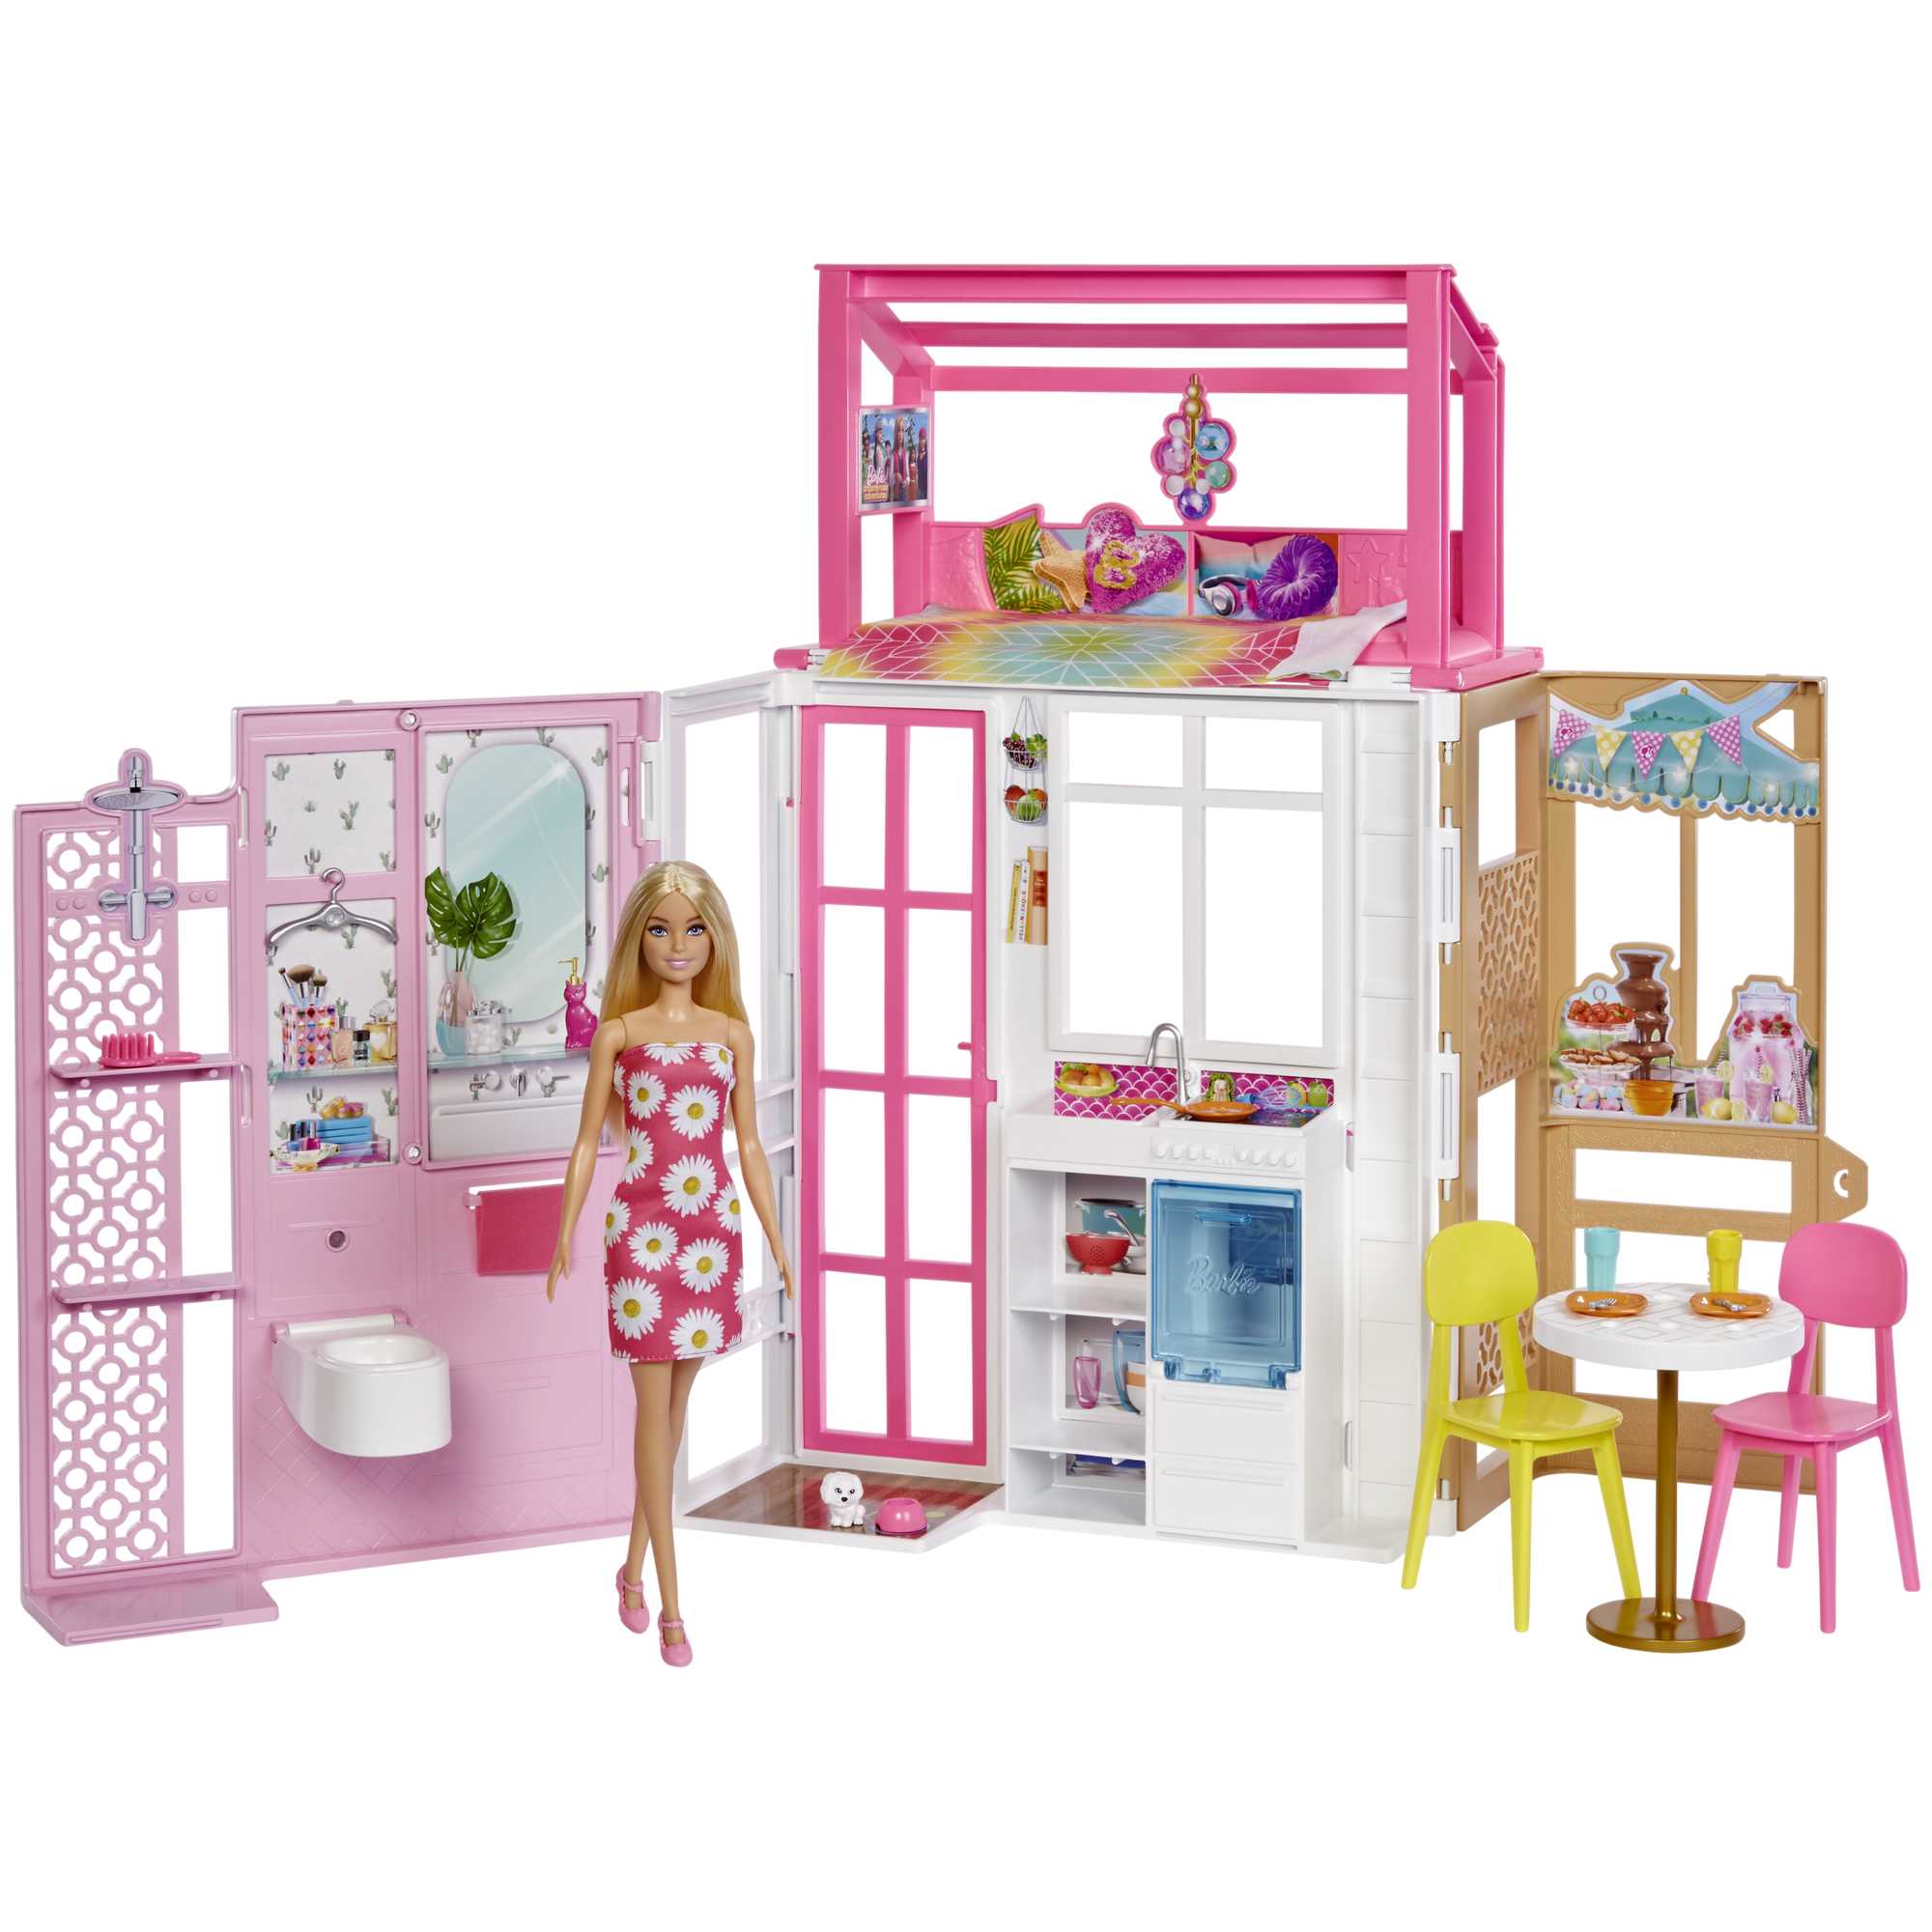 Bi forælder Prestigefyldte Barbie Casa 2 pisos Casa amueblada para muñecas de juguete | HCD48 | MATTEL